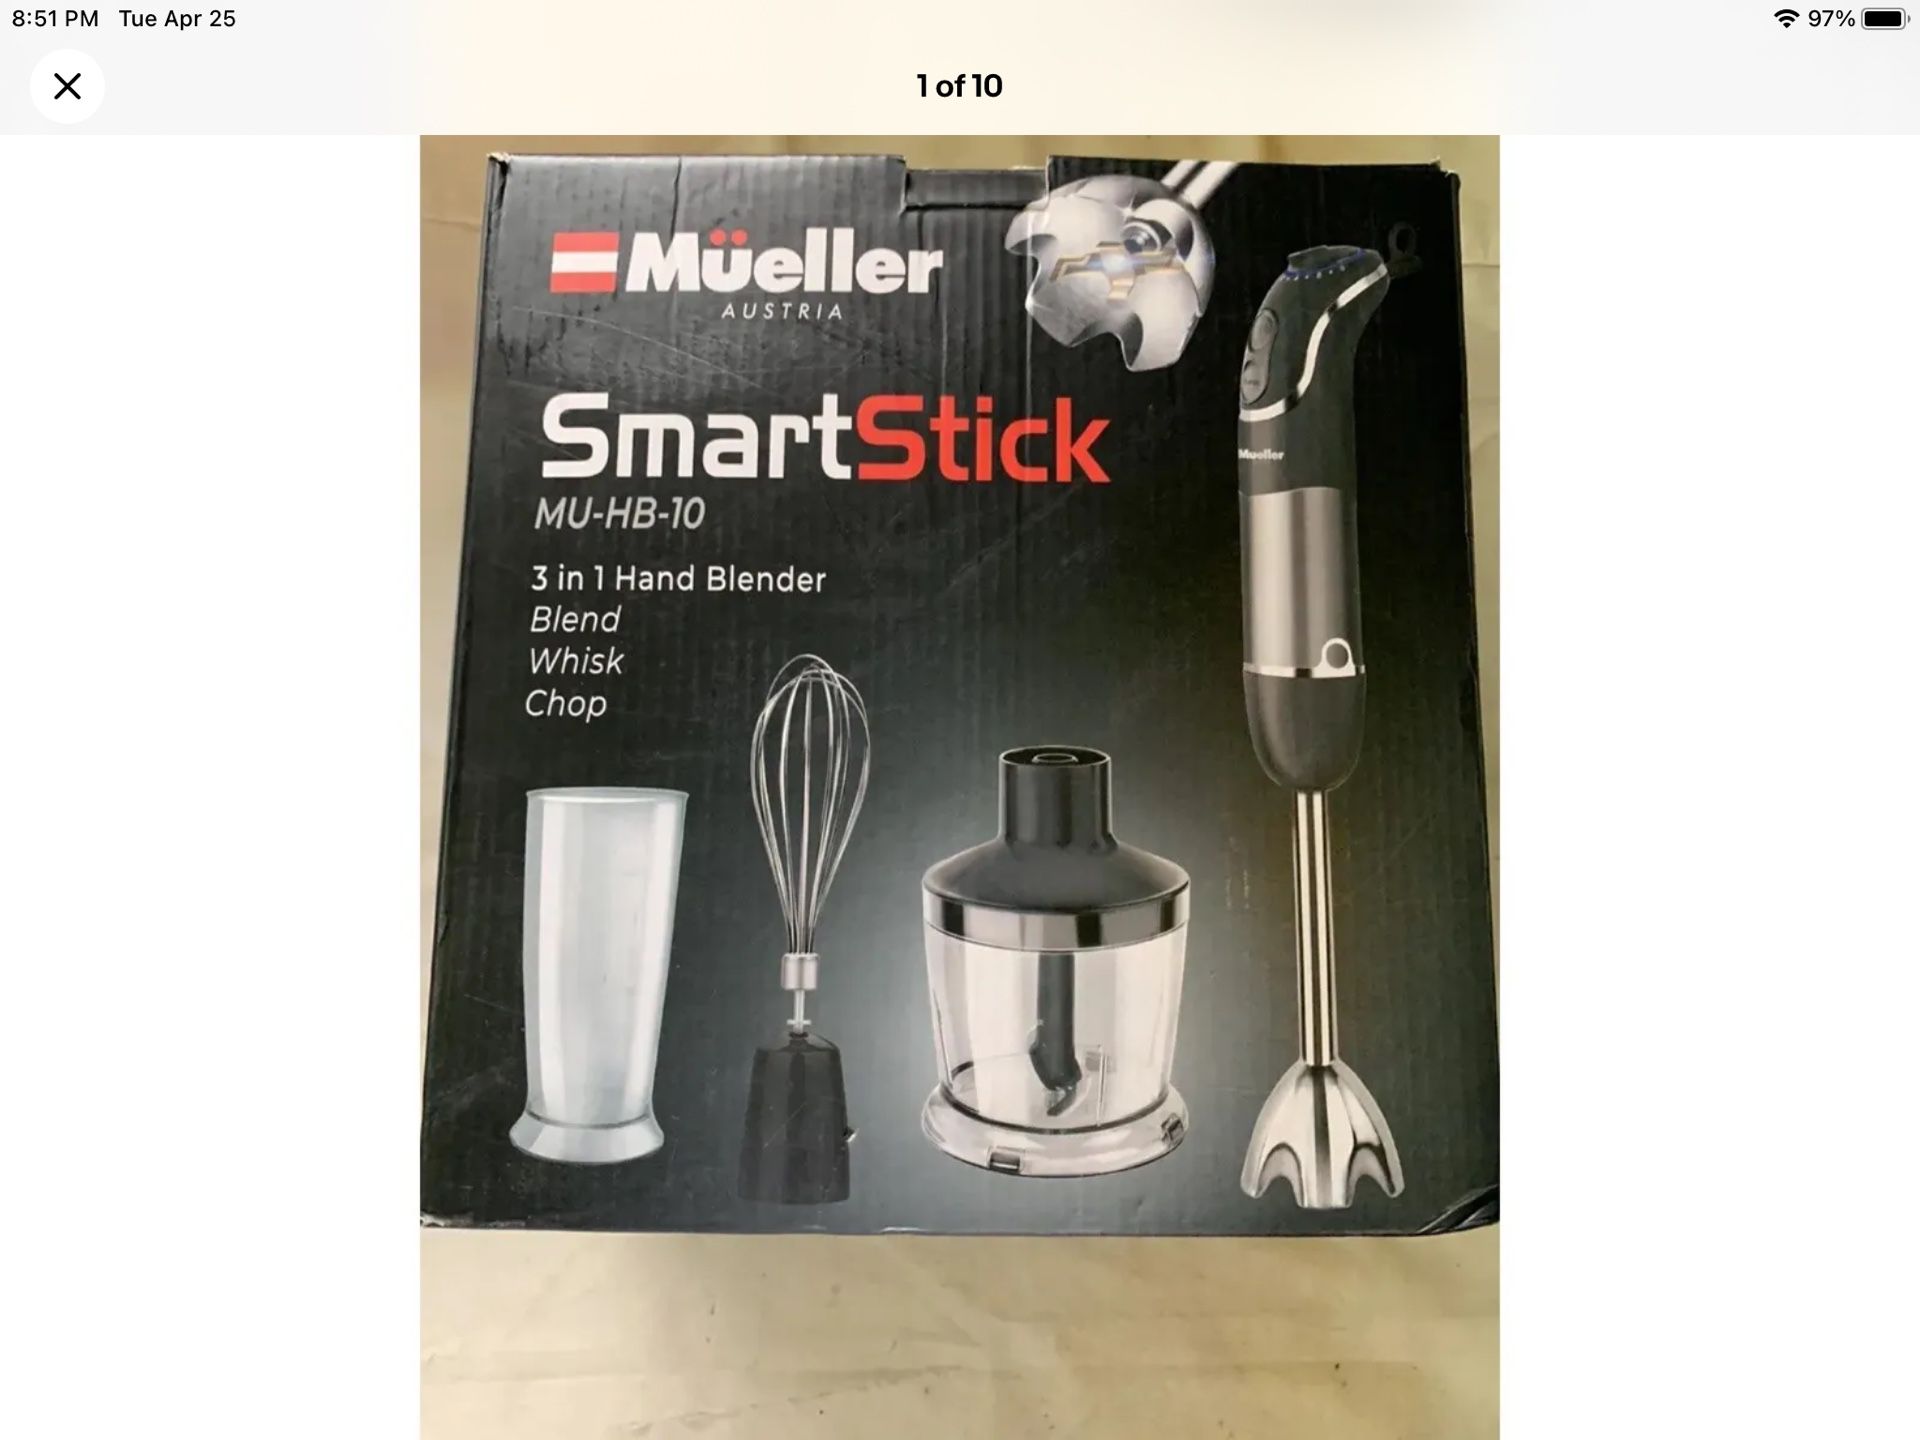 Mueller Austria Smart Stick MU-HB-10, 3 In 1 Hand Blender, Blend, Whisk,  Chop New! NIB for Sale in San Pedro, CA - OfferUp